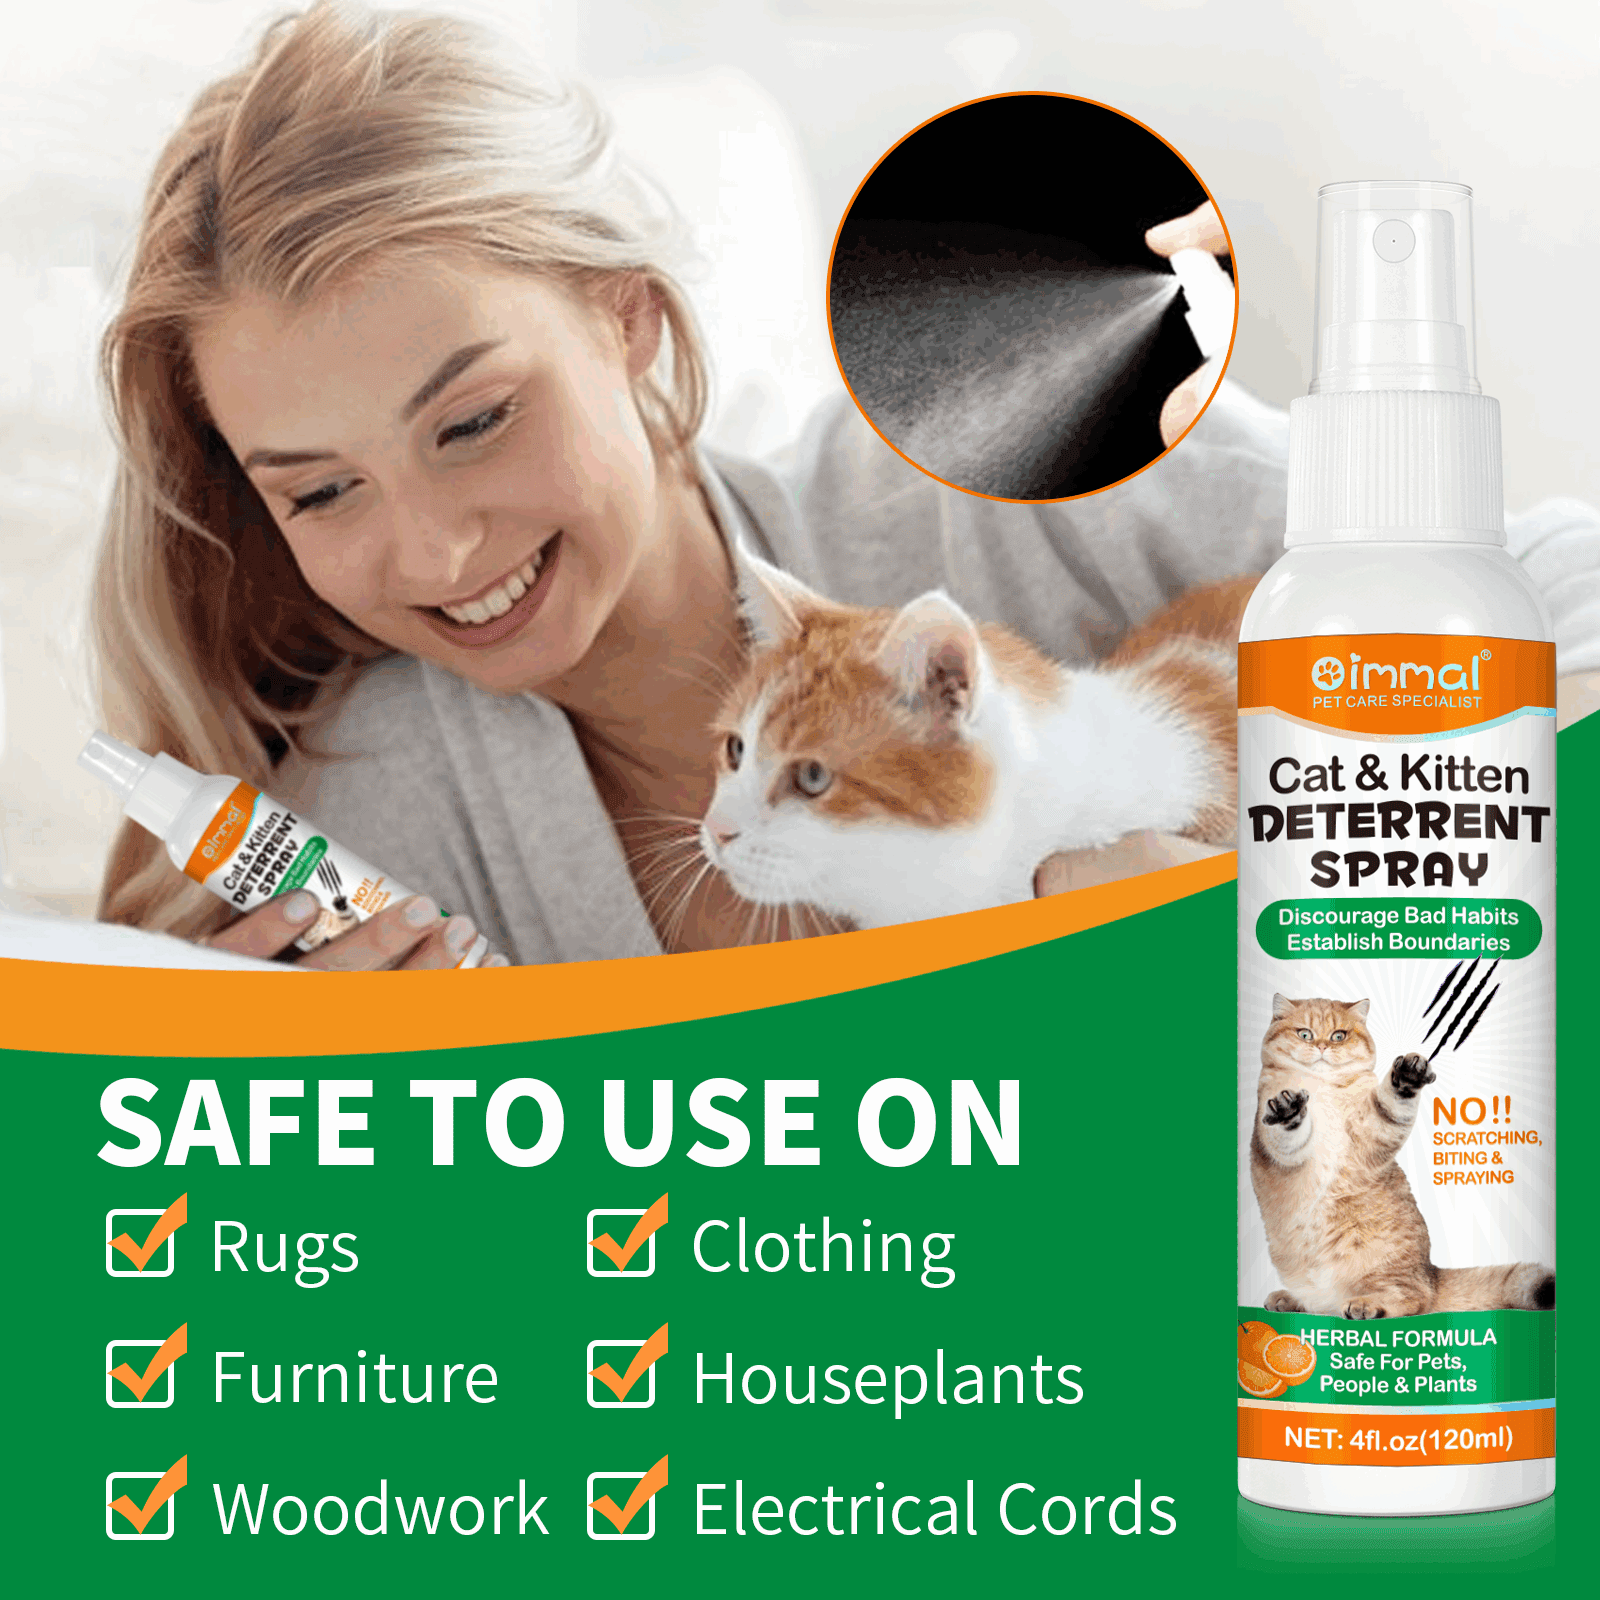 Oimmal Cat Deterrent Spray 120ml, Cat & Kitten Training Aid with Bitter,  Anti Scratch Furniture Protector Establish Boundaries & Keep Cat off -  1pack 